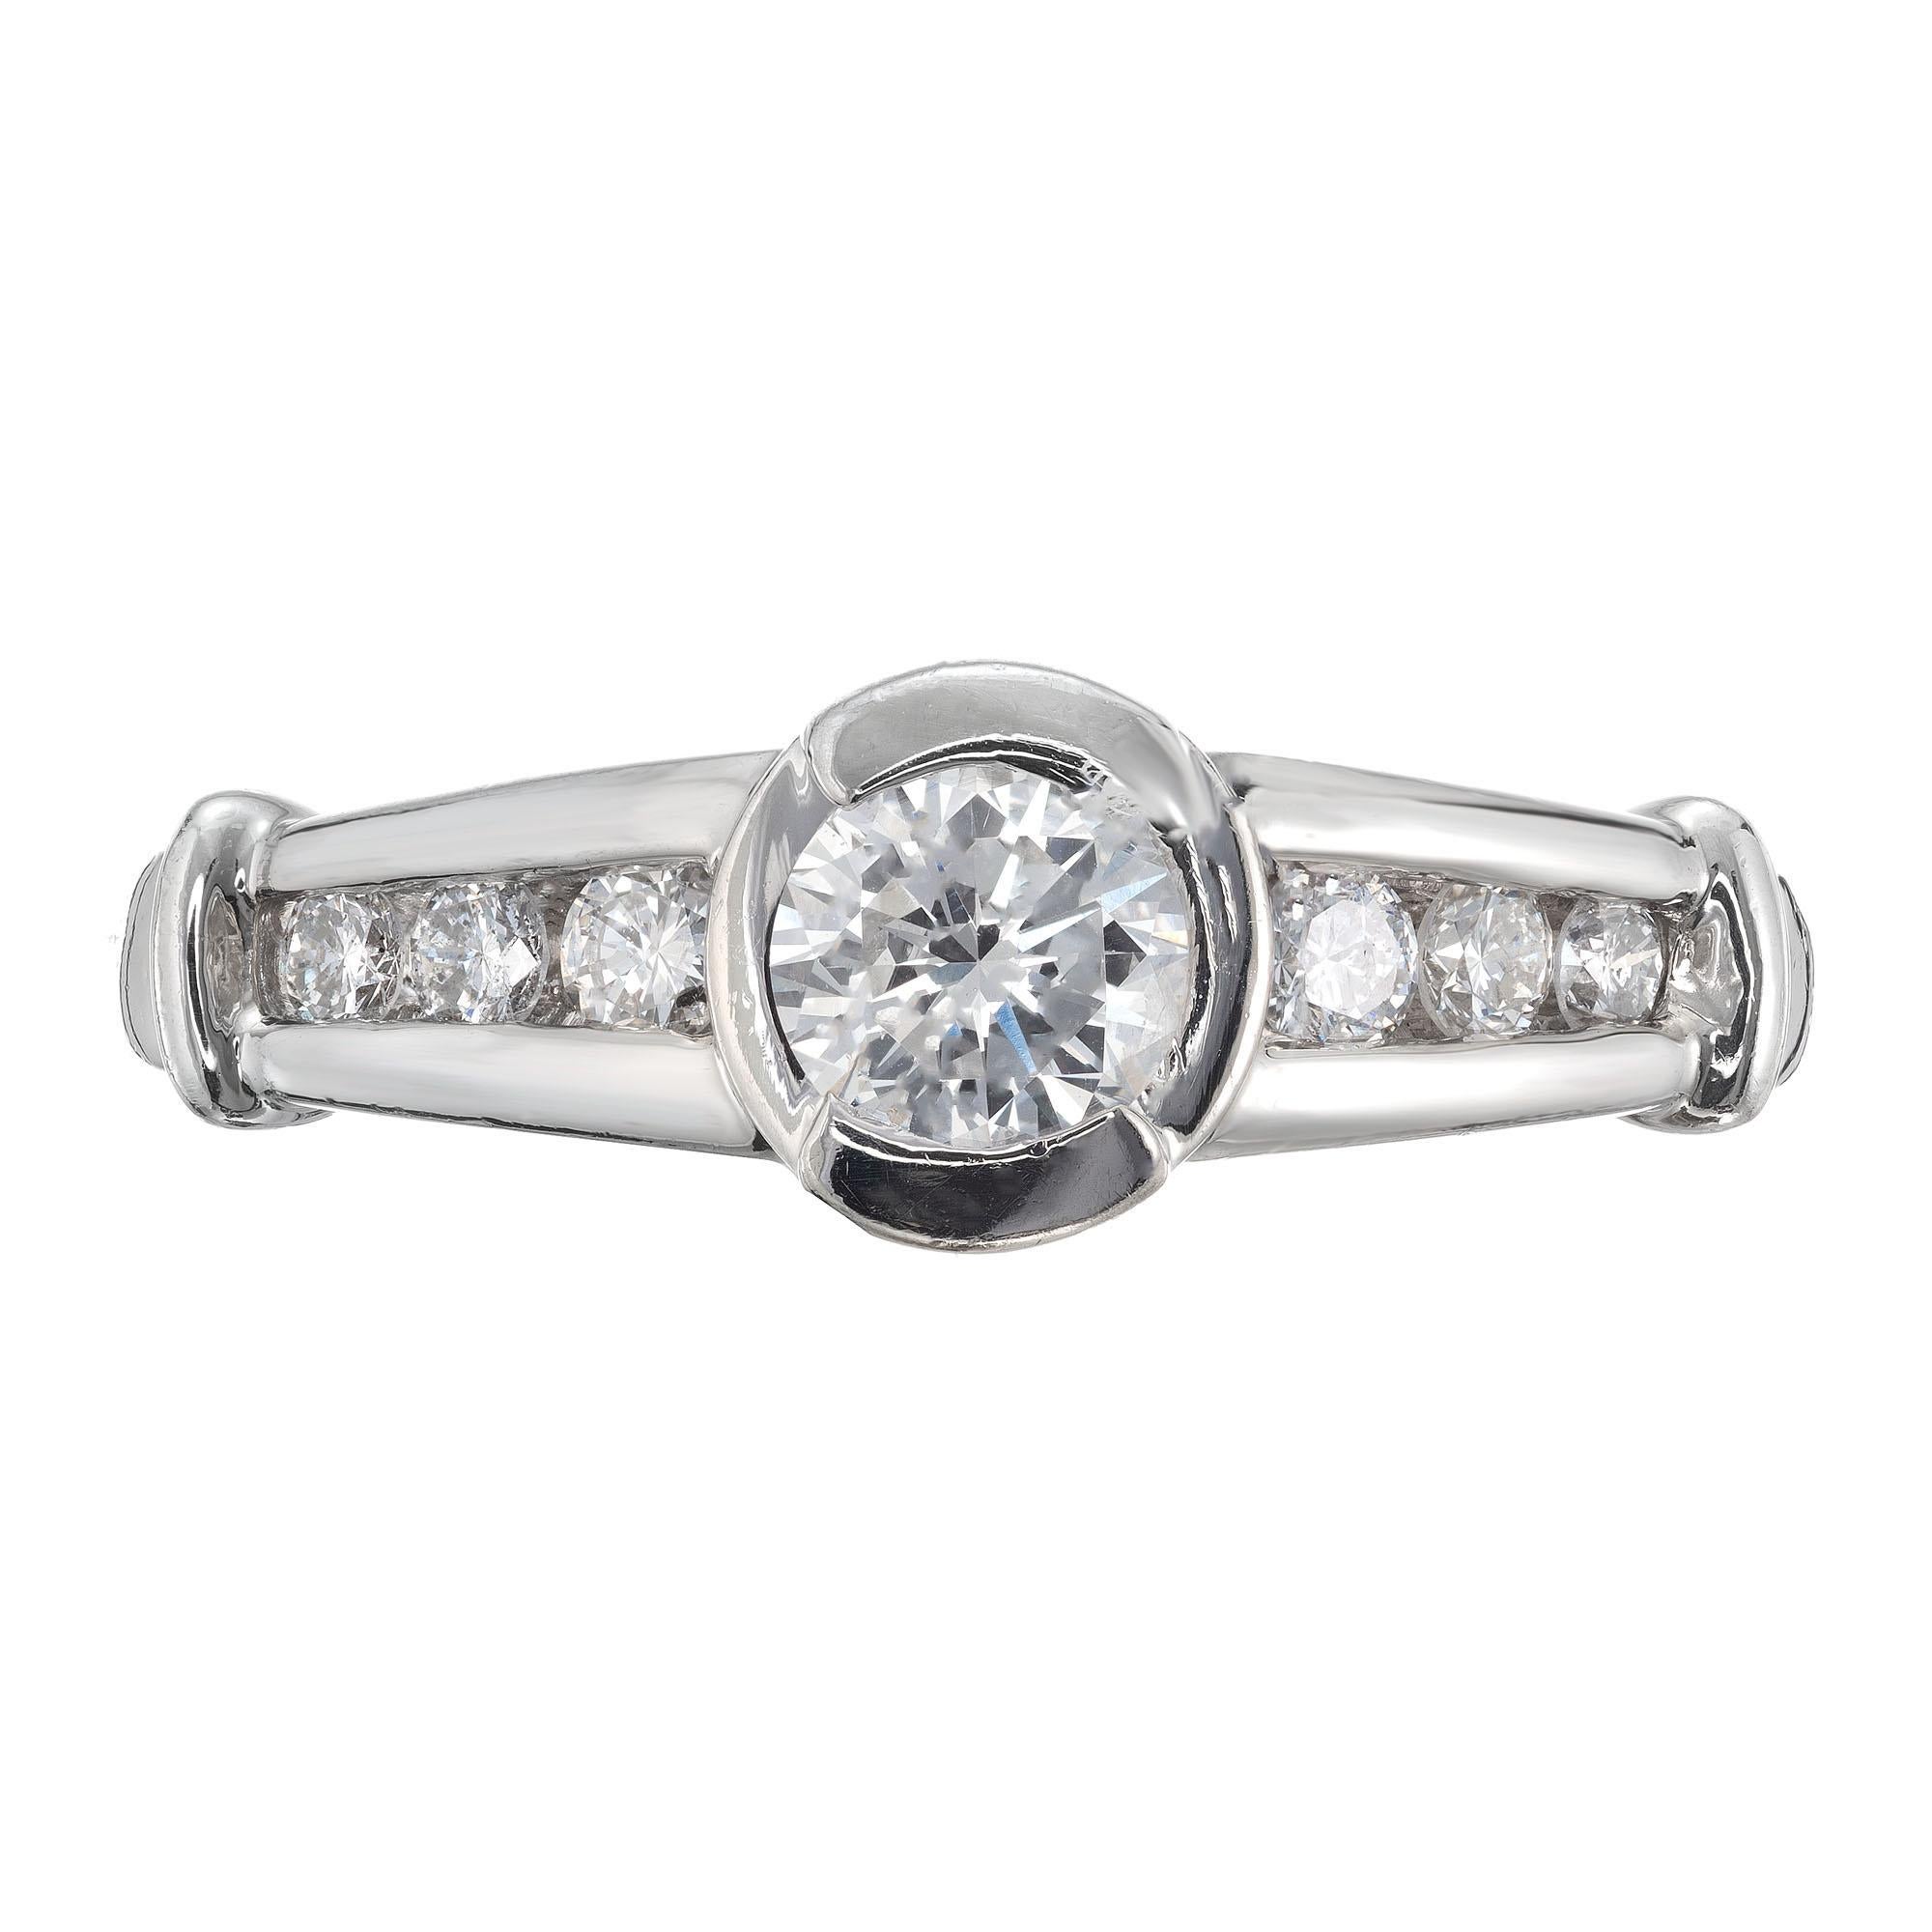 Designer FD diamond engagement ring. EGL certified round center semi bezel diamond with 6 full cut diamonds in a platinum setting. 

One diamond, approx. total weight .40ct, F, SI2, 4.70 x 4.50 x 2.90mm. EGL certificate #US64571901D
6 full cut